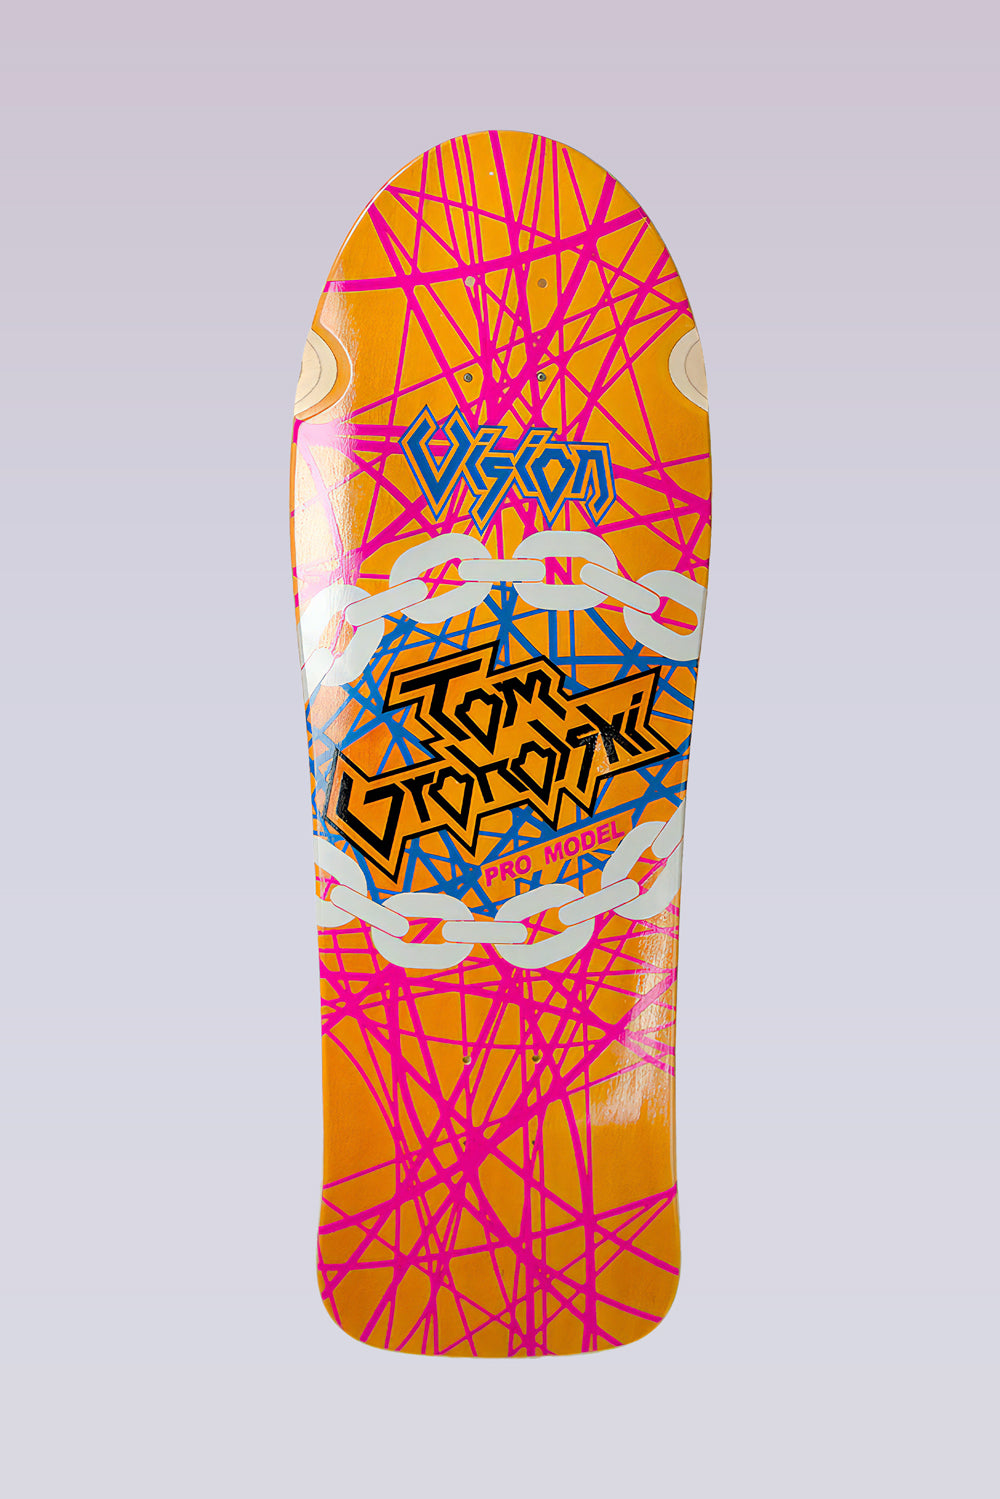 Groholski Heavy Metal Skateboard Deck - 29.75" x 9.75" - Orange Stain